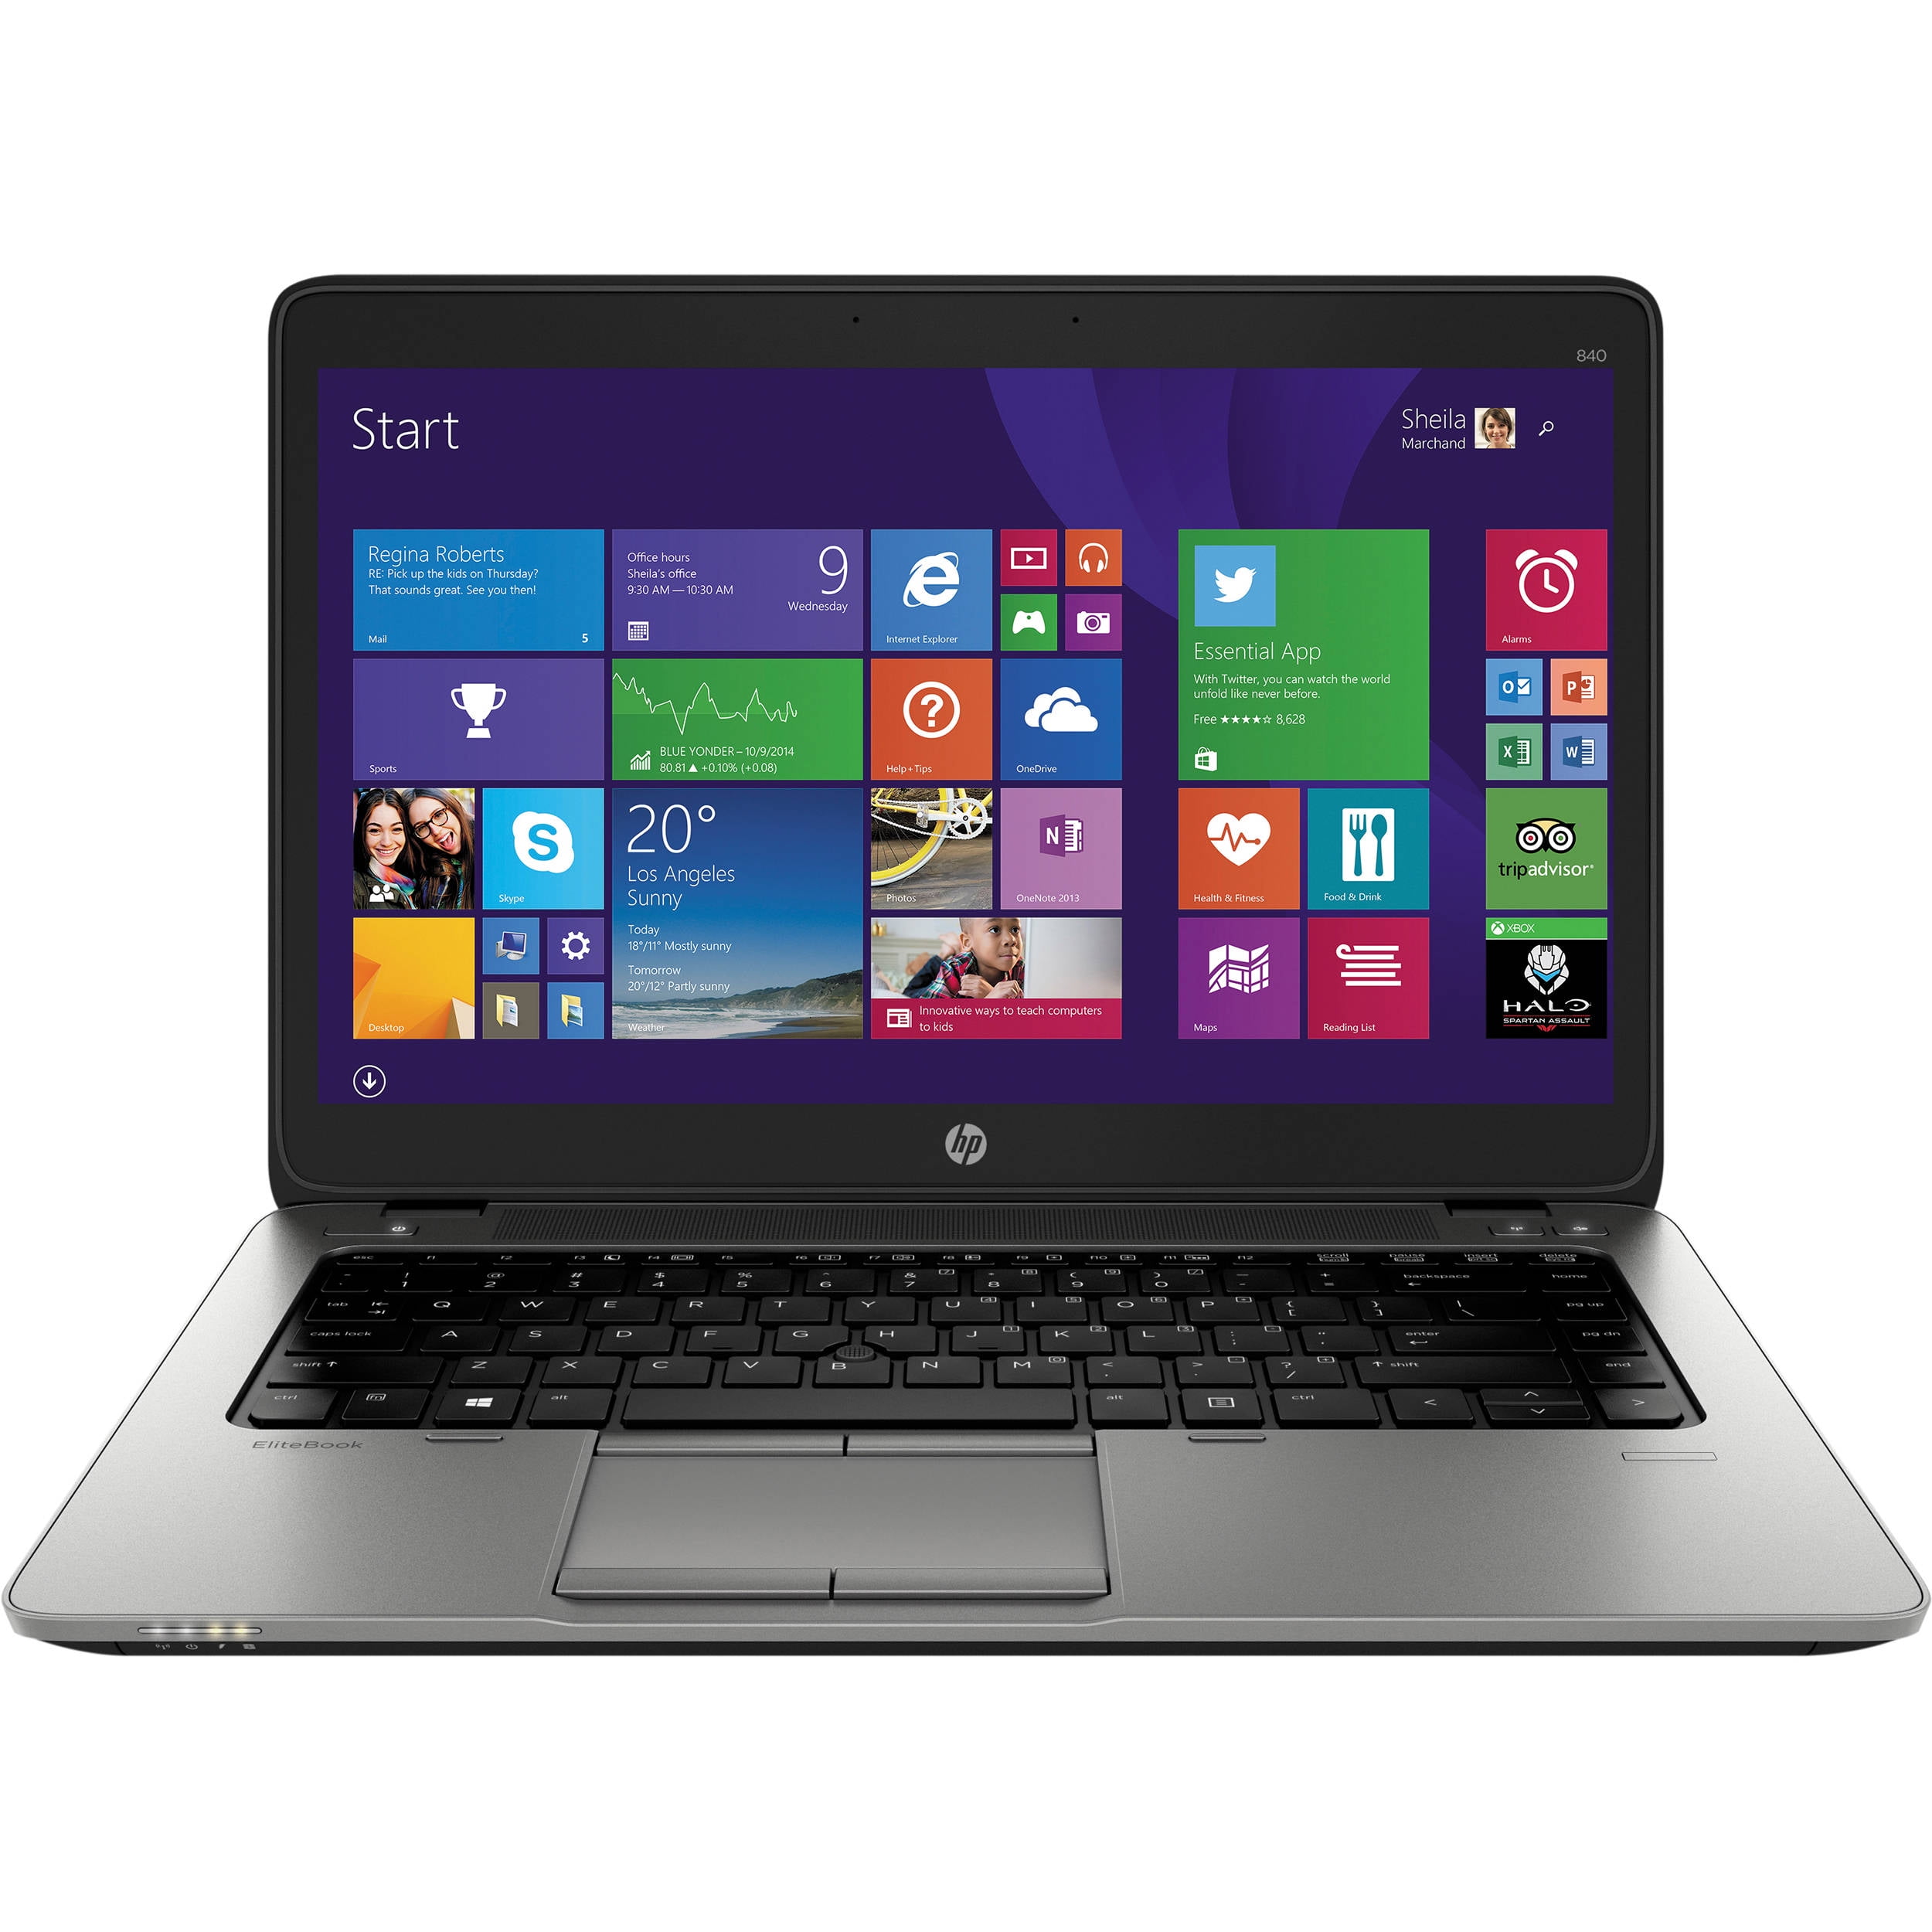 NEW 1TB Hard Drive Windows 7 Professional 64 Loaded for HP EliteBook 840 G2 